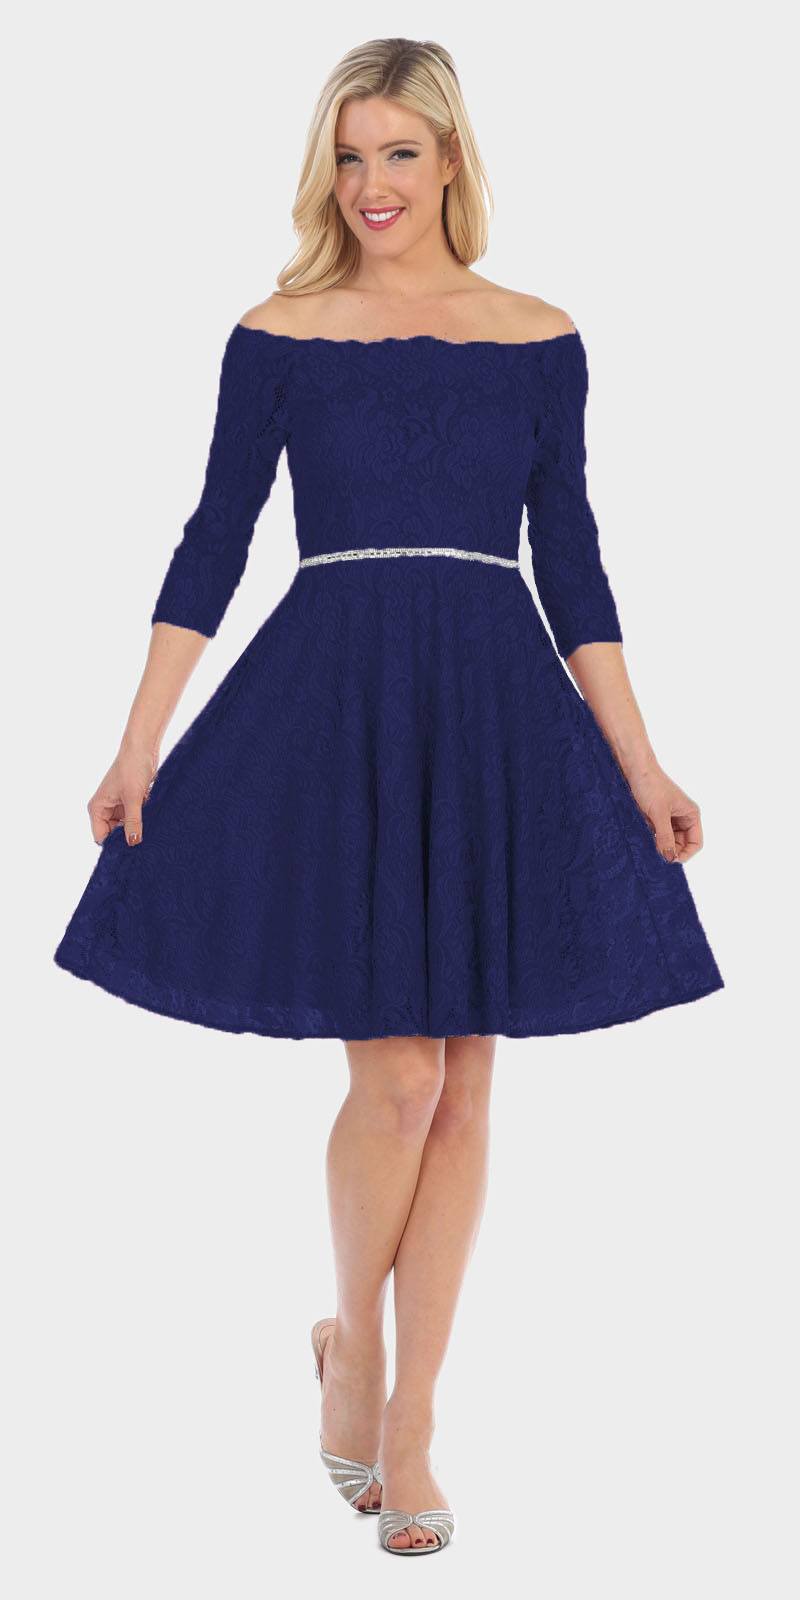 Celavie 6343 Off-the-Shoulder Short Lace Homecoming Dress Navy Blue